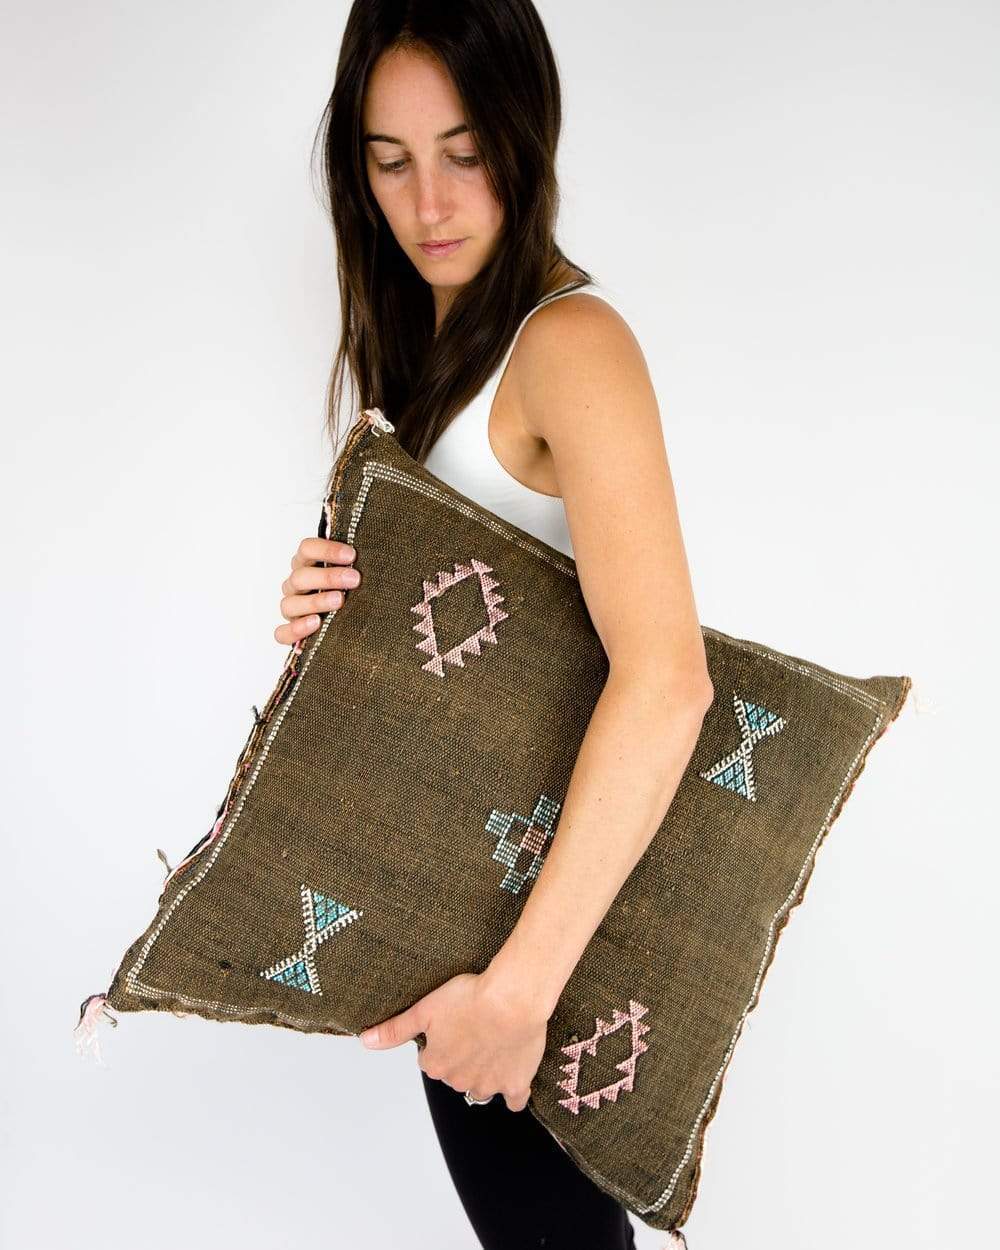 Bryar Wolf Handmade Decorative Throw Pillows BOU